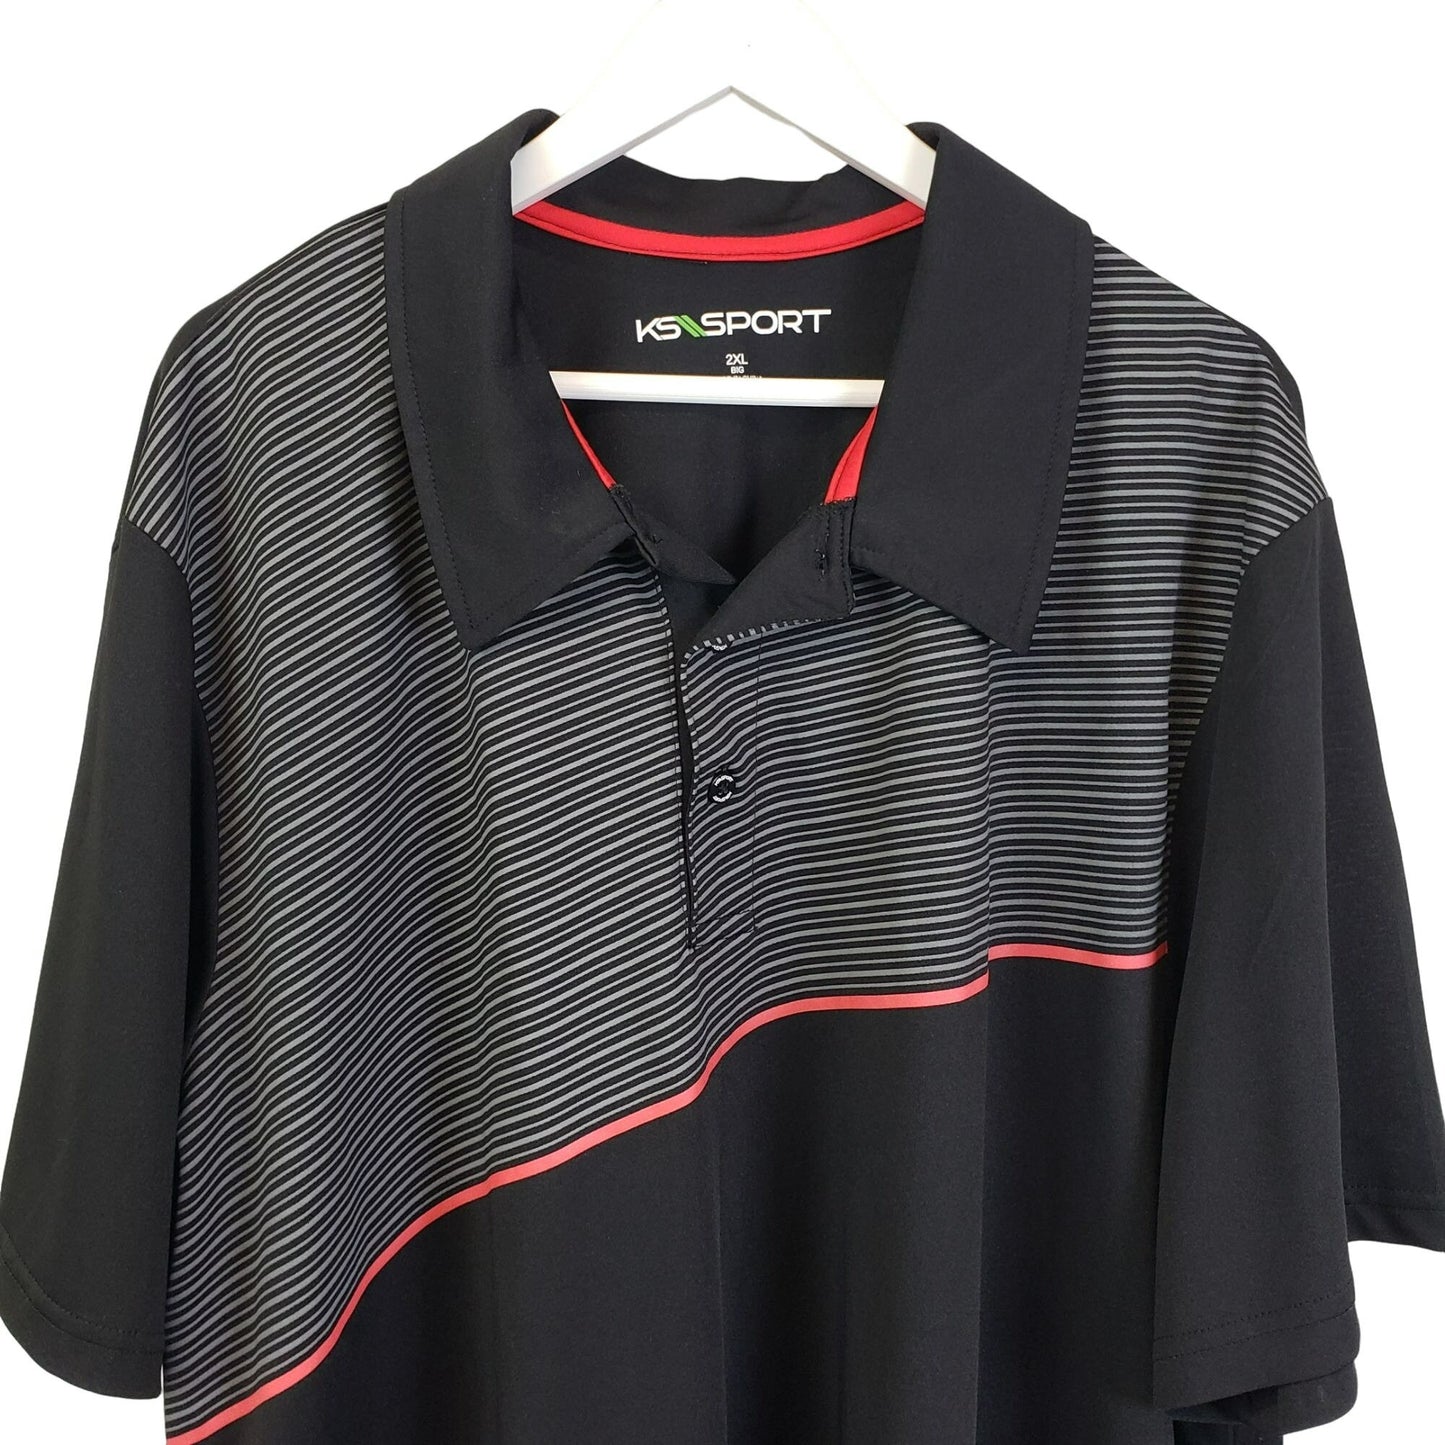 KS Sport Mixed Print Polo Golf Shirt Size 2XL Big